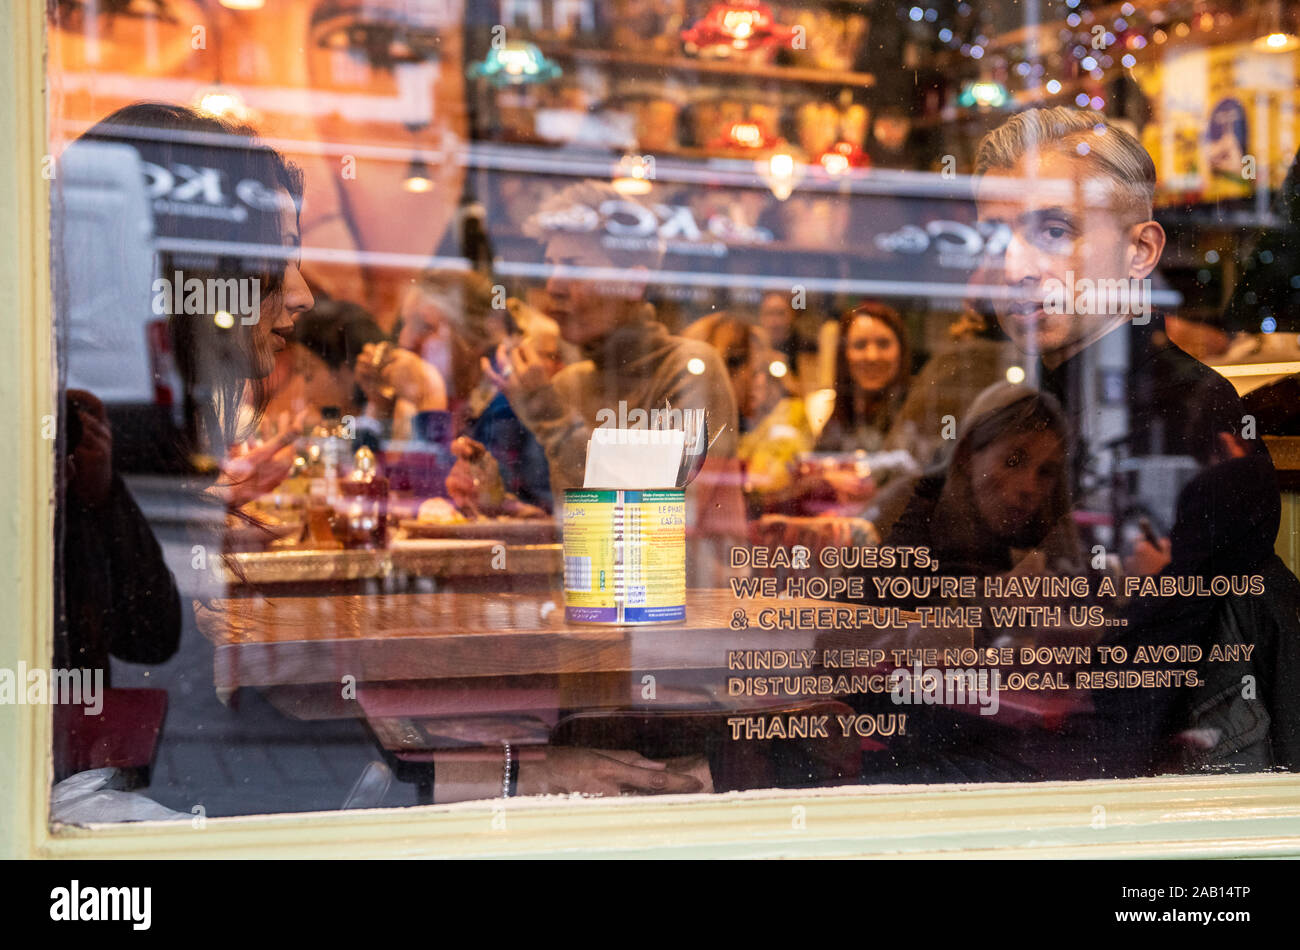 Kunden durch Fenster in busy cafe Mittagessen sitzen. South Kensington, London, England, UK. Stockfoto